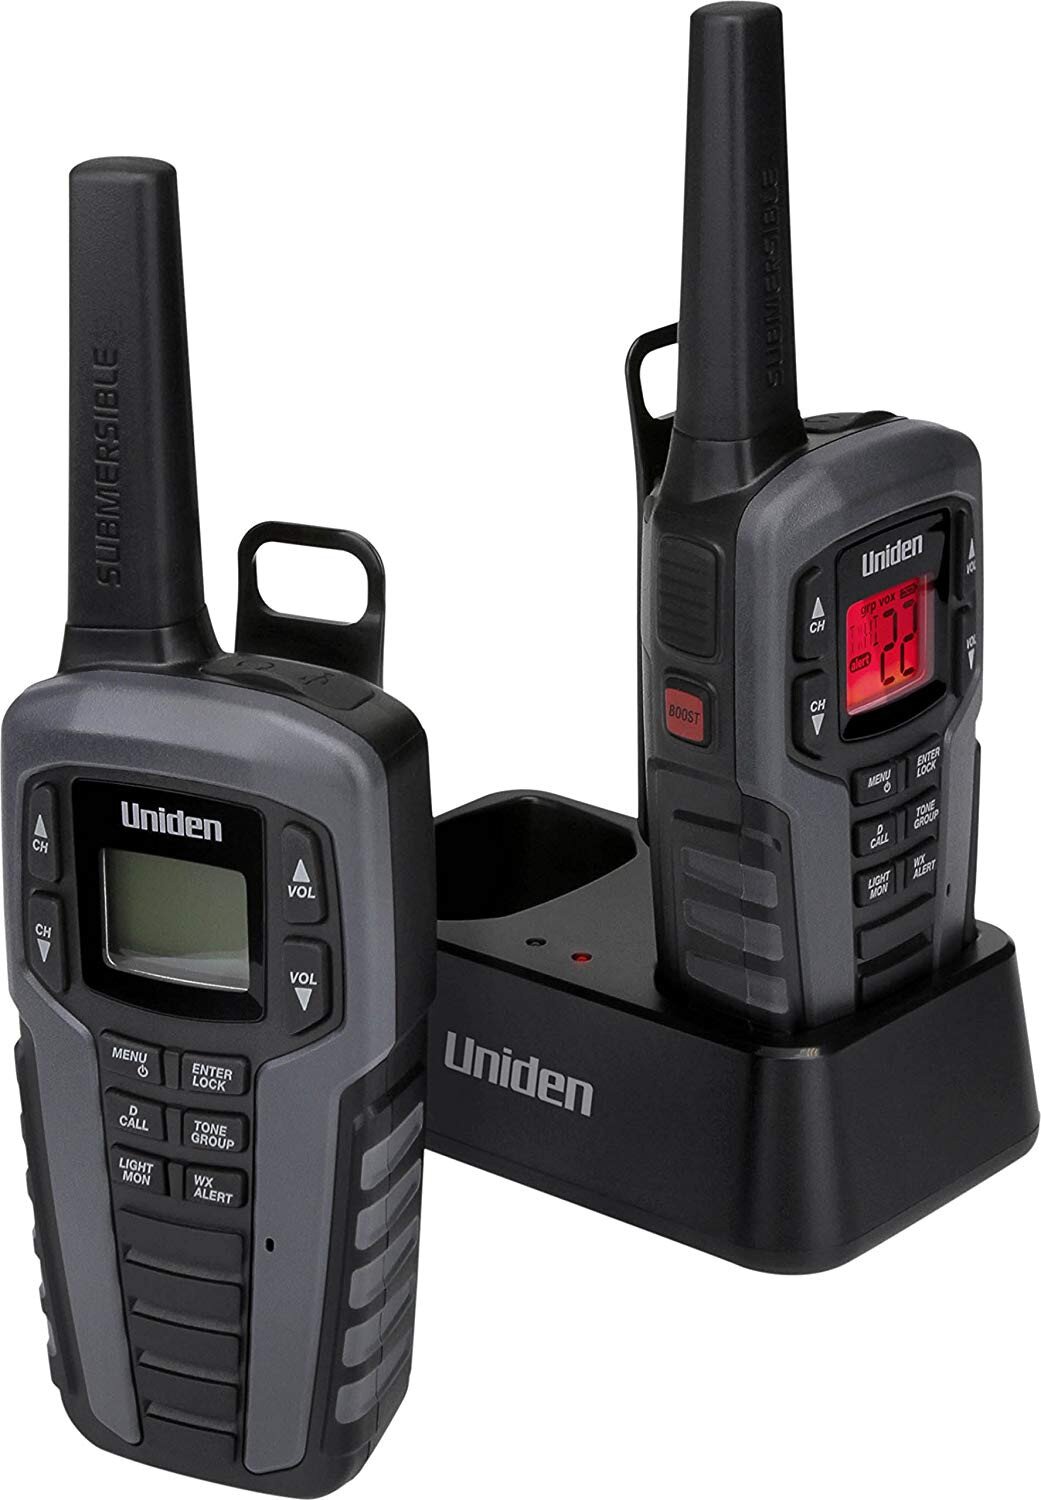 Uniden SX507-2CKHS Up to 50 Mile Range Two-Way Radio Walkie Talkies W Dual Charging Cradle, Waterproof, Floats, 22 Channels, 142 Privacy Codes, NOAA W - 1